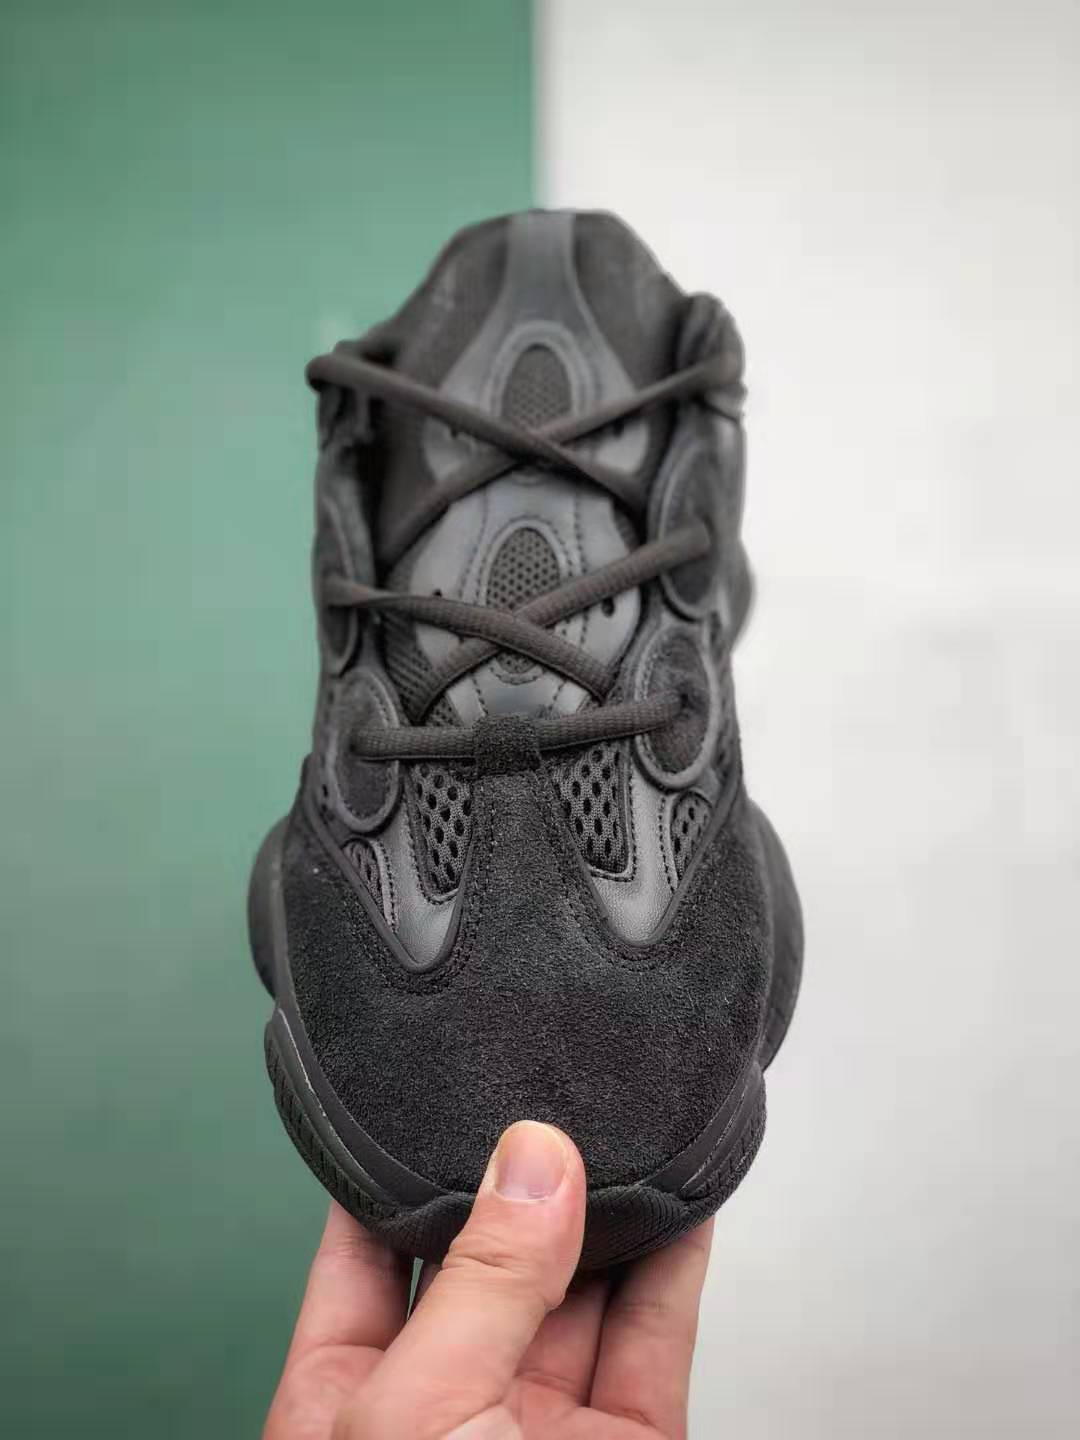 Adidas Yeezy 500 Utility Black Shoes - Premium Quality & Comfort